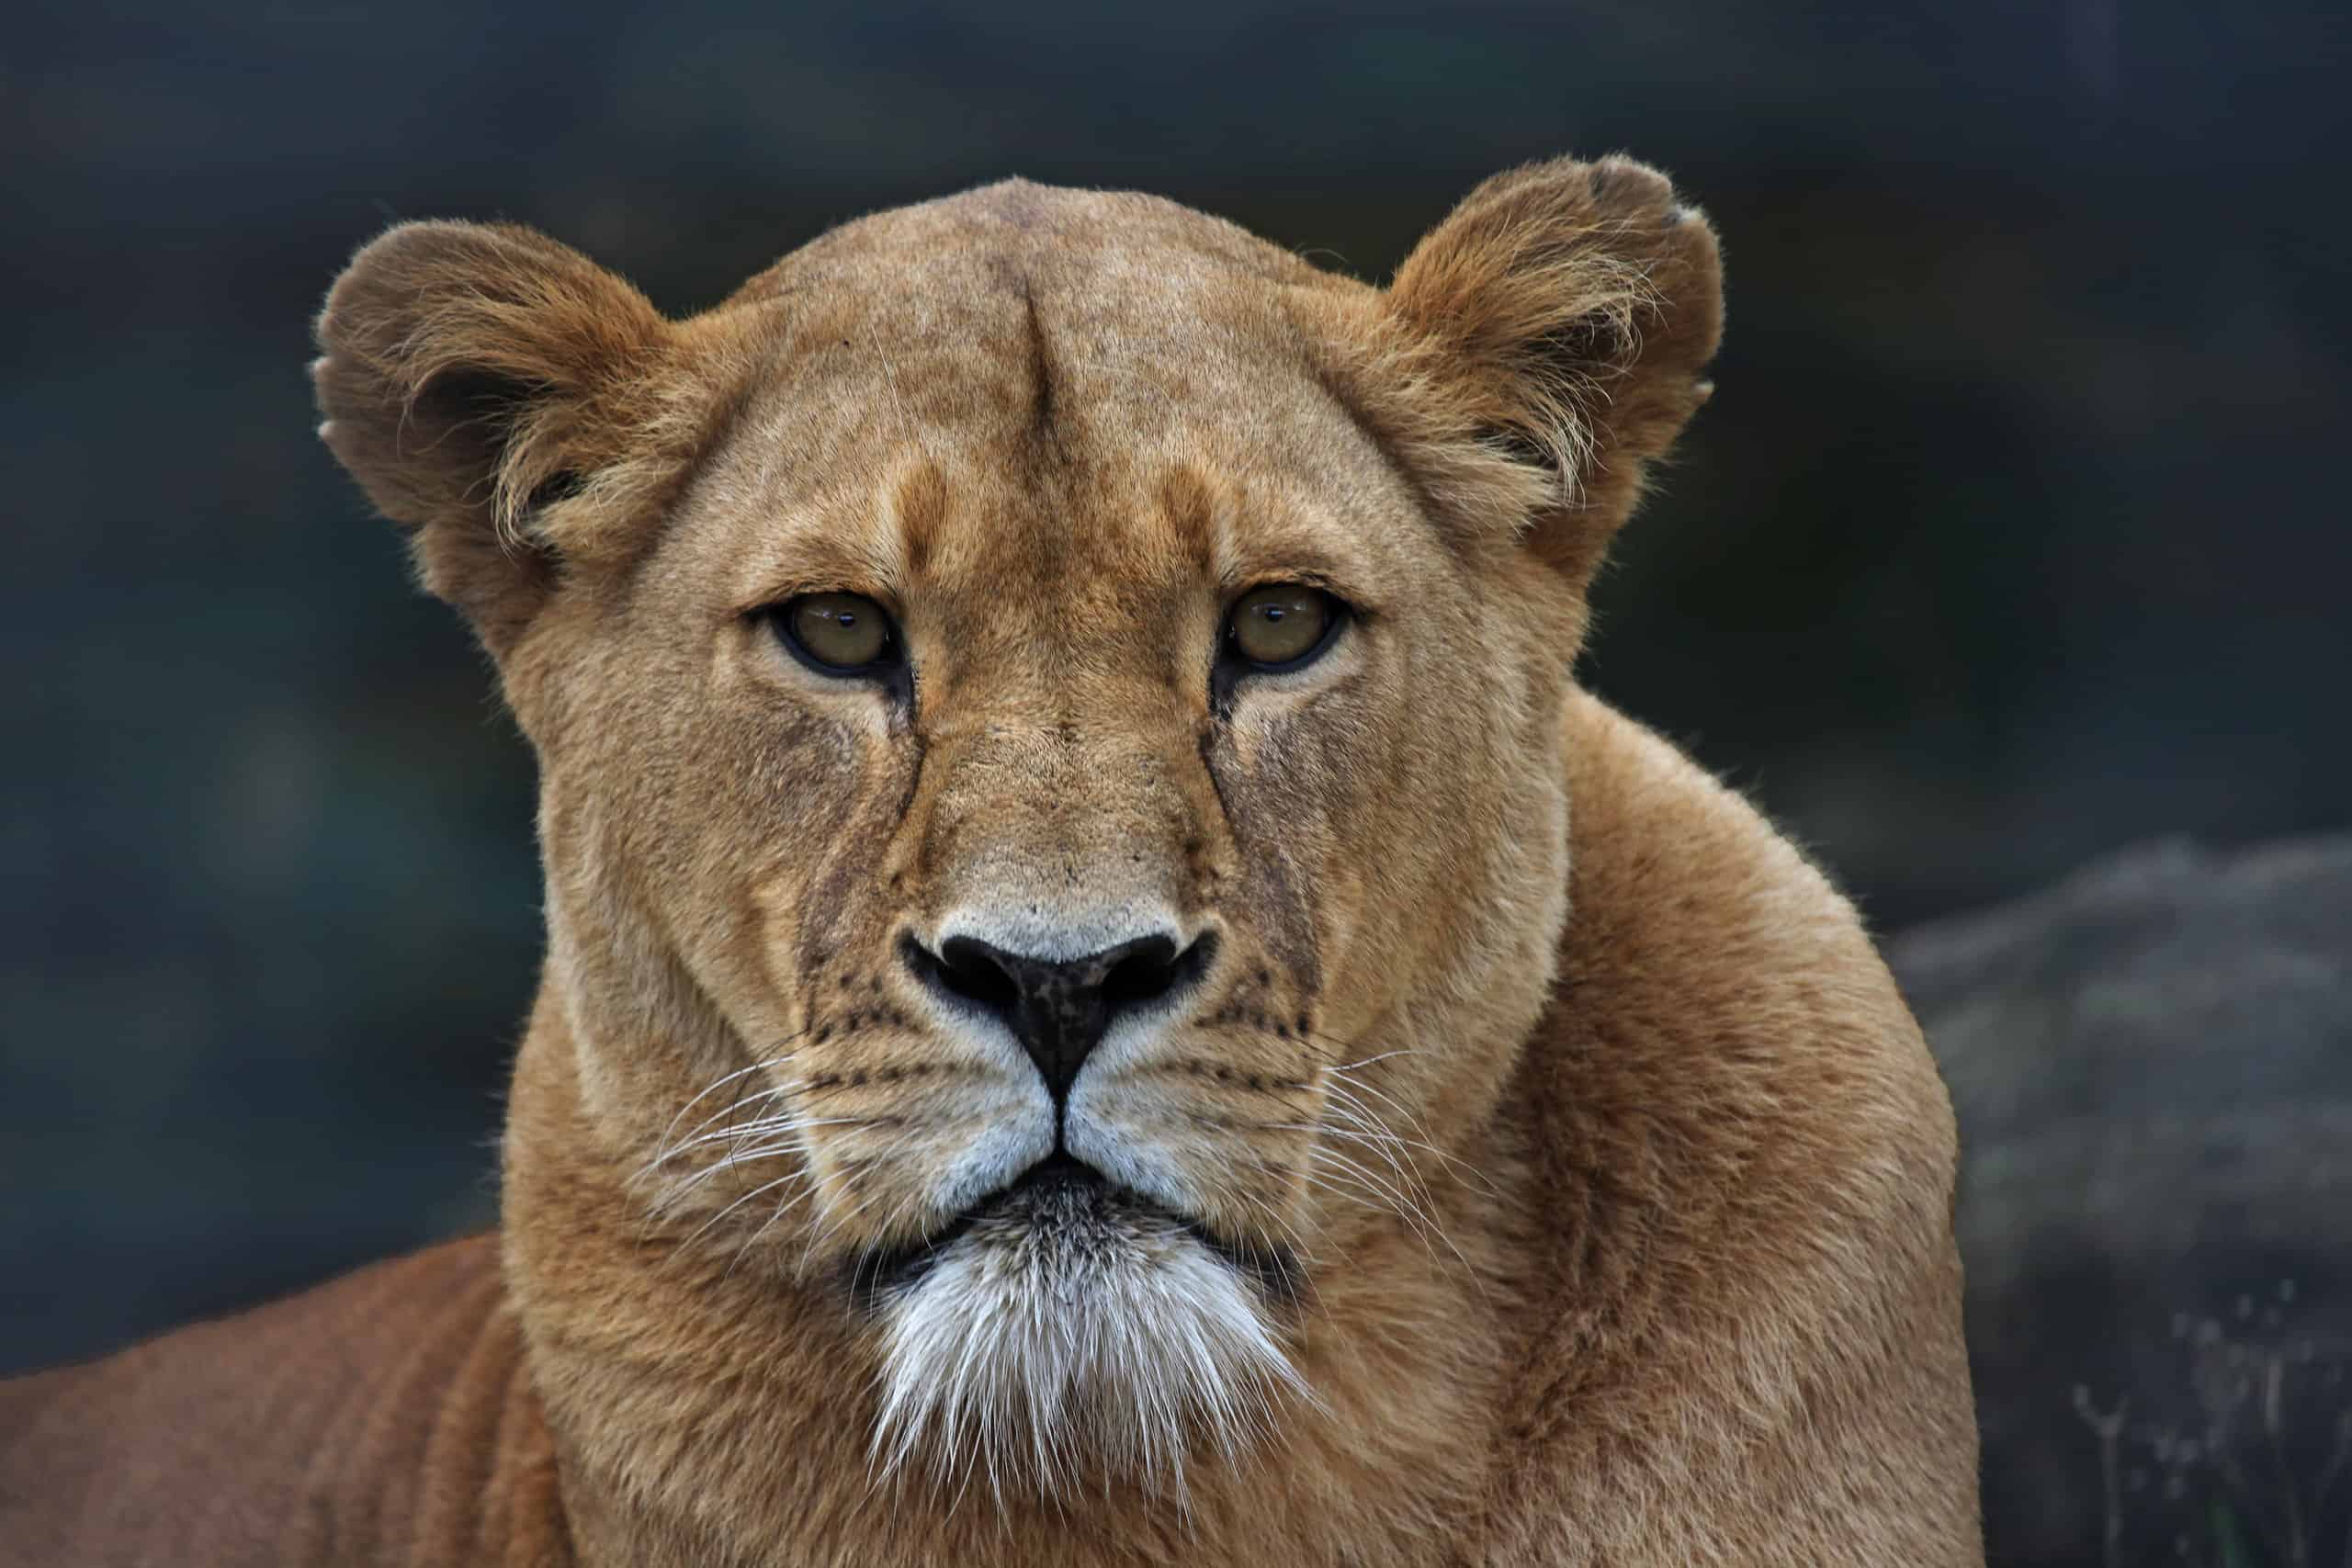 Lion Tiger Size Comparison  Felid Morphology's Study-Blog